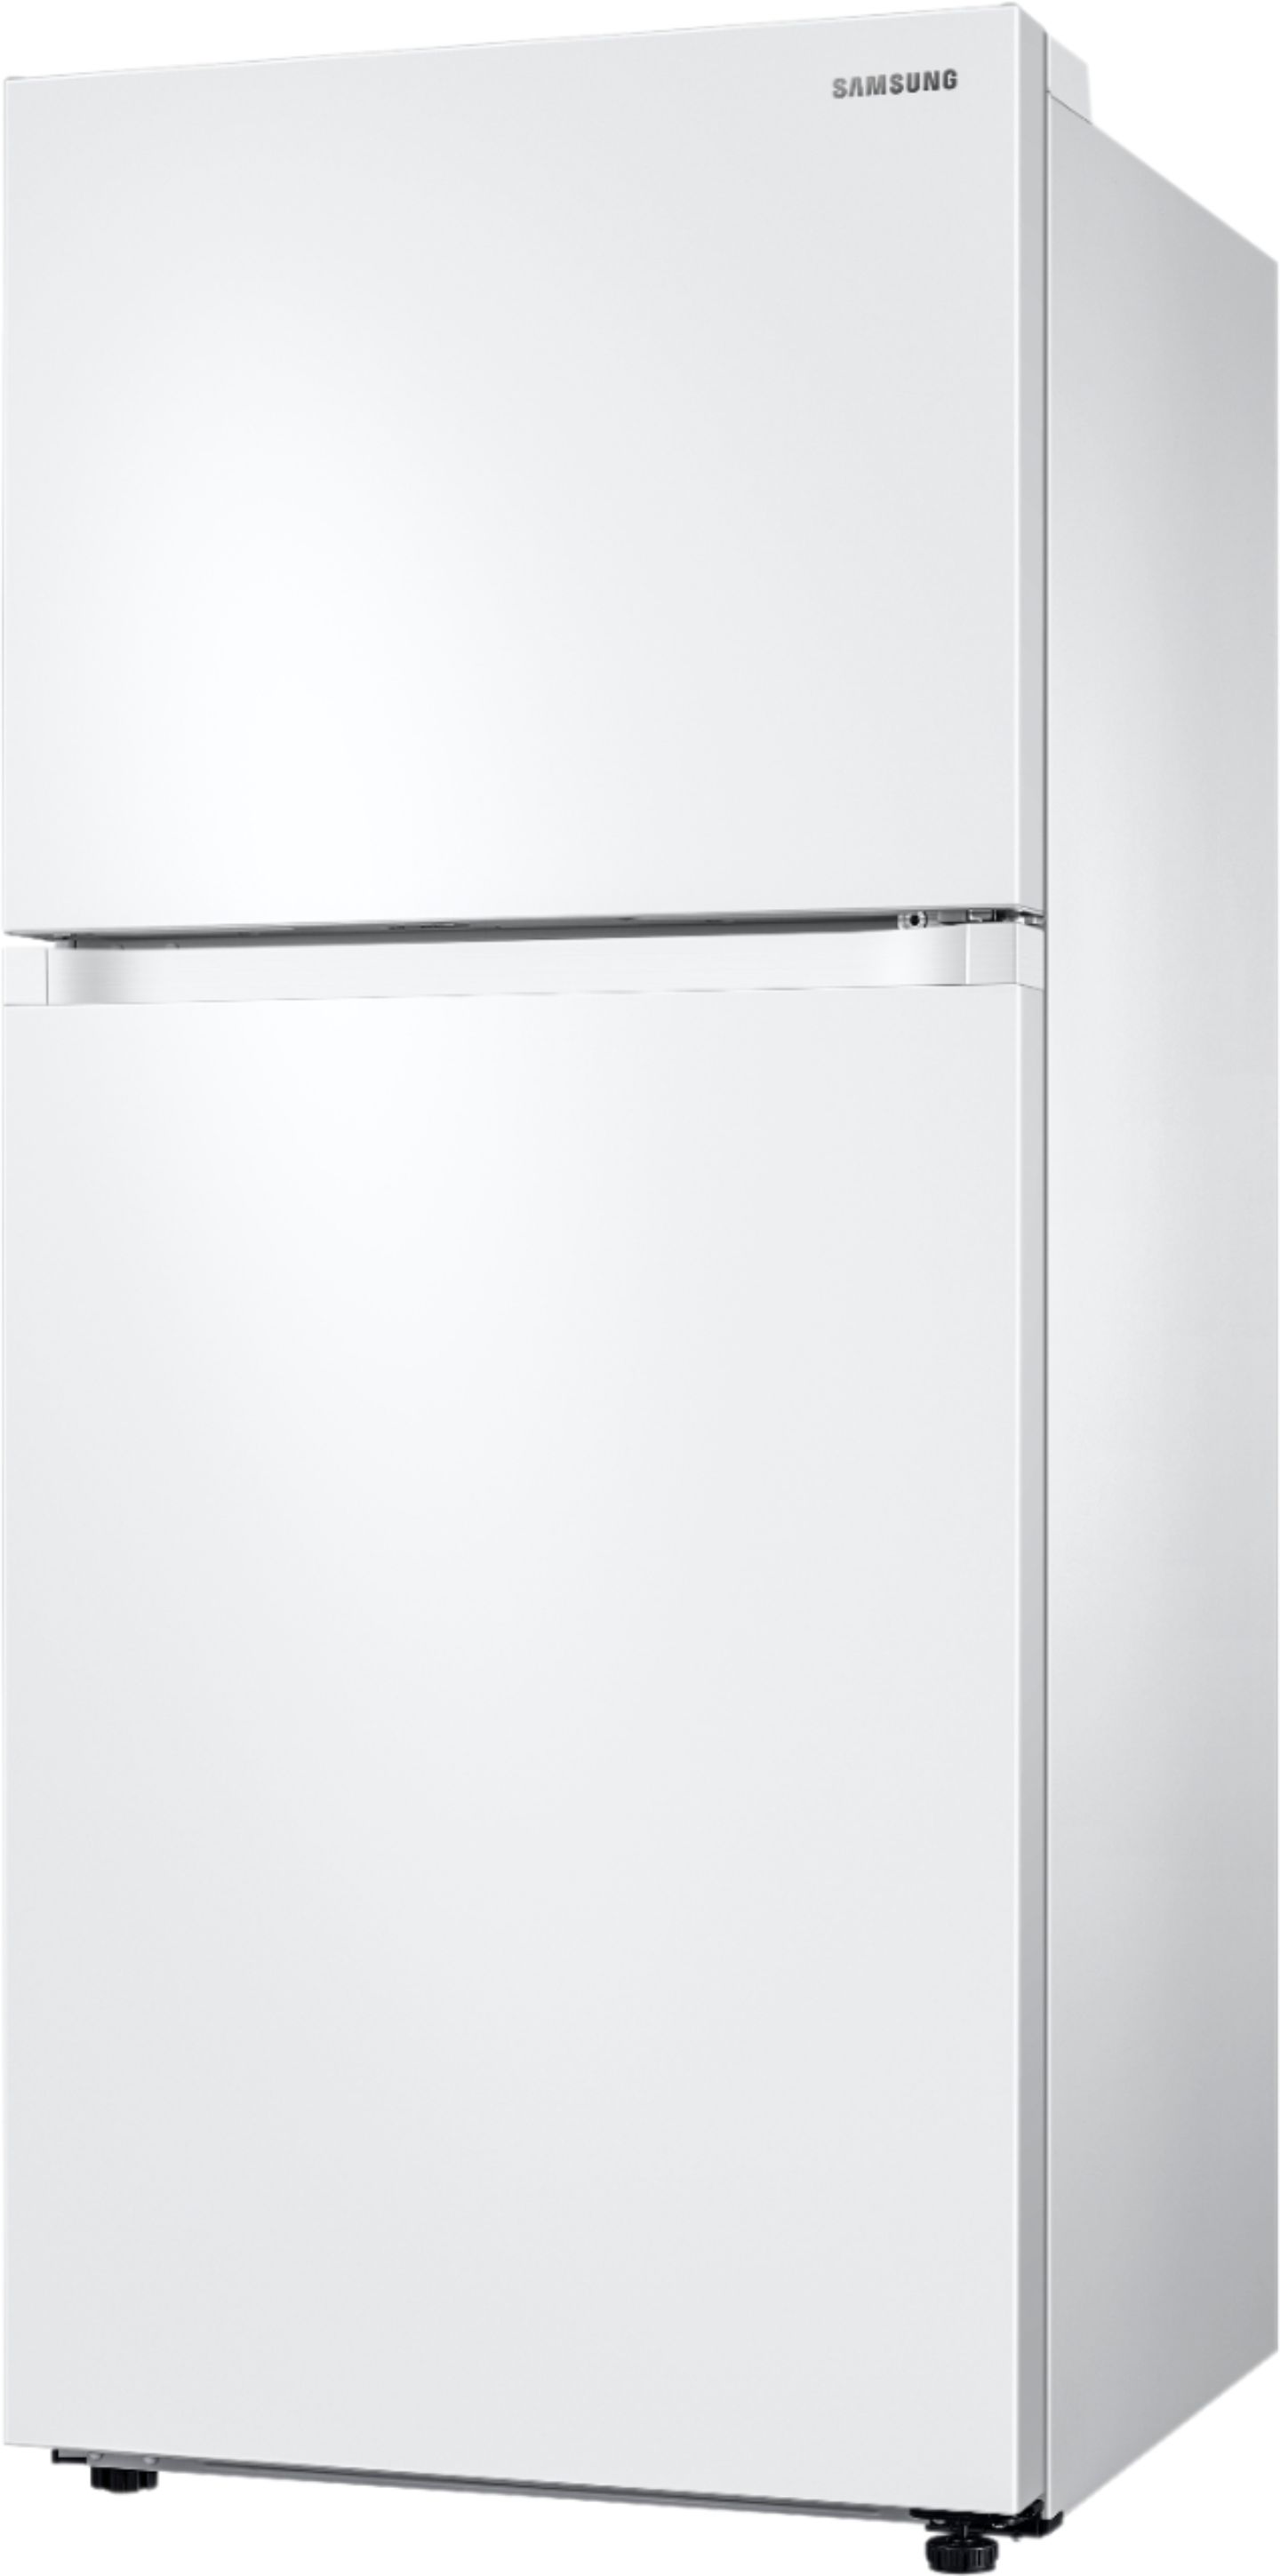 Left View: Samsung - 17.6 Cu. Ft. Top-Freezer Refrigerator - White